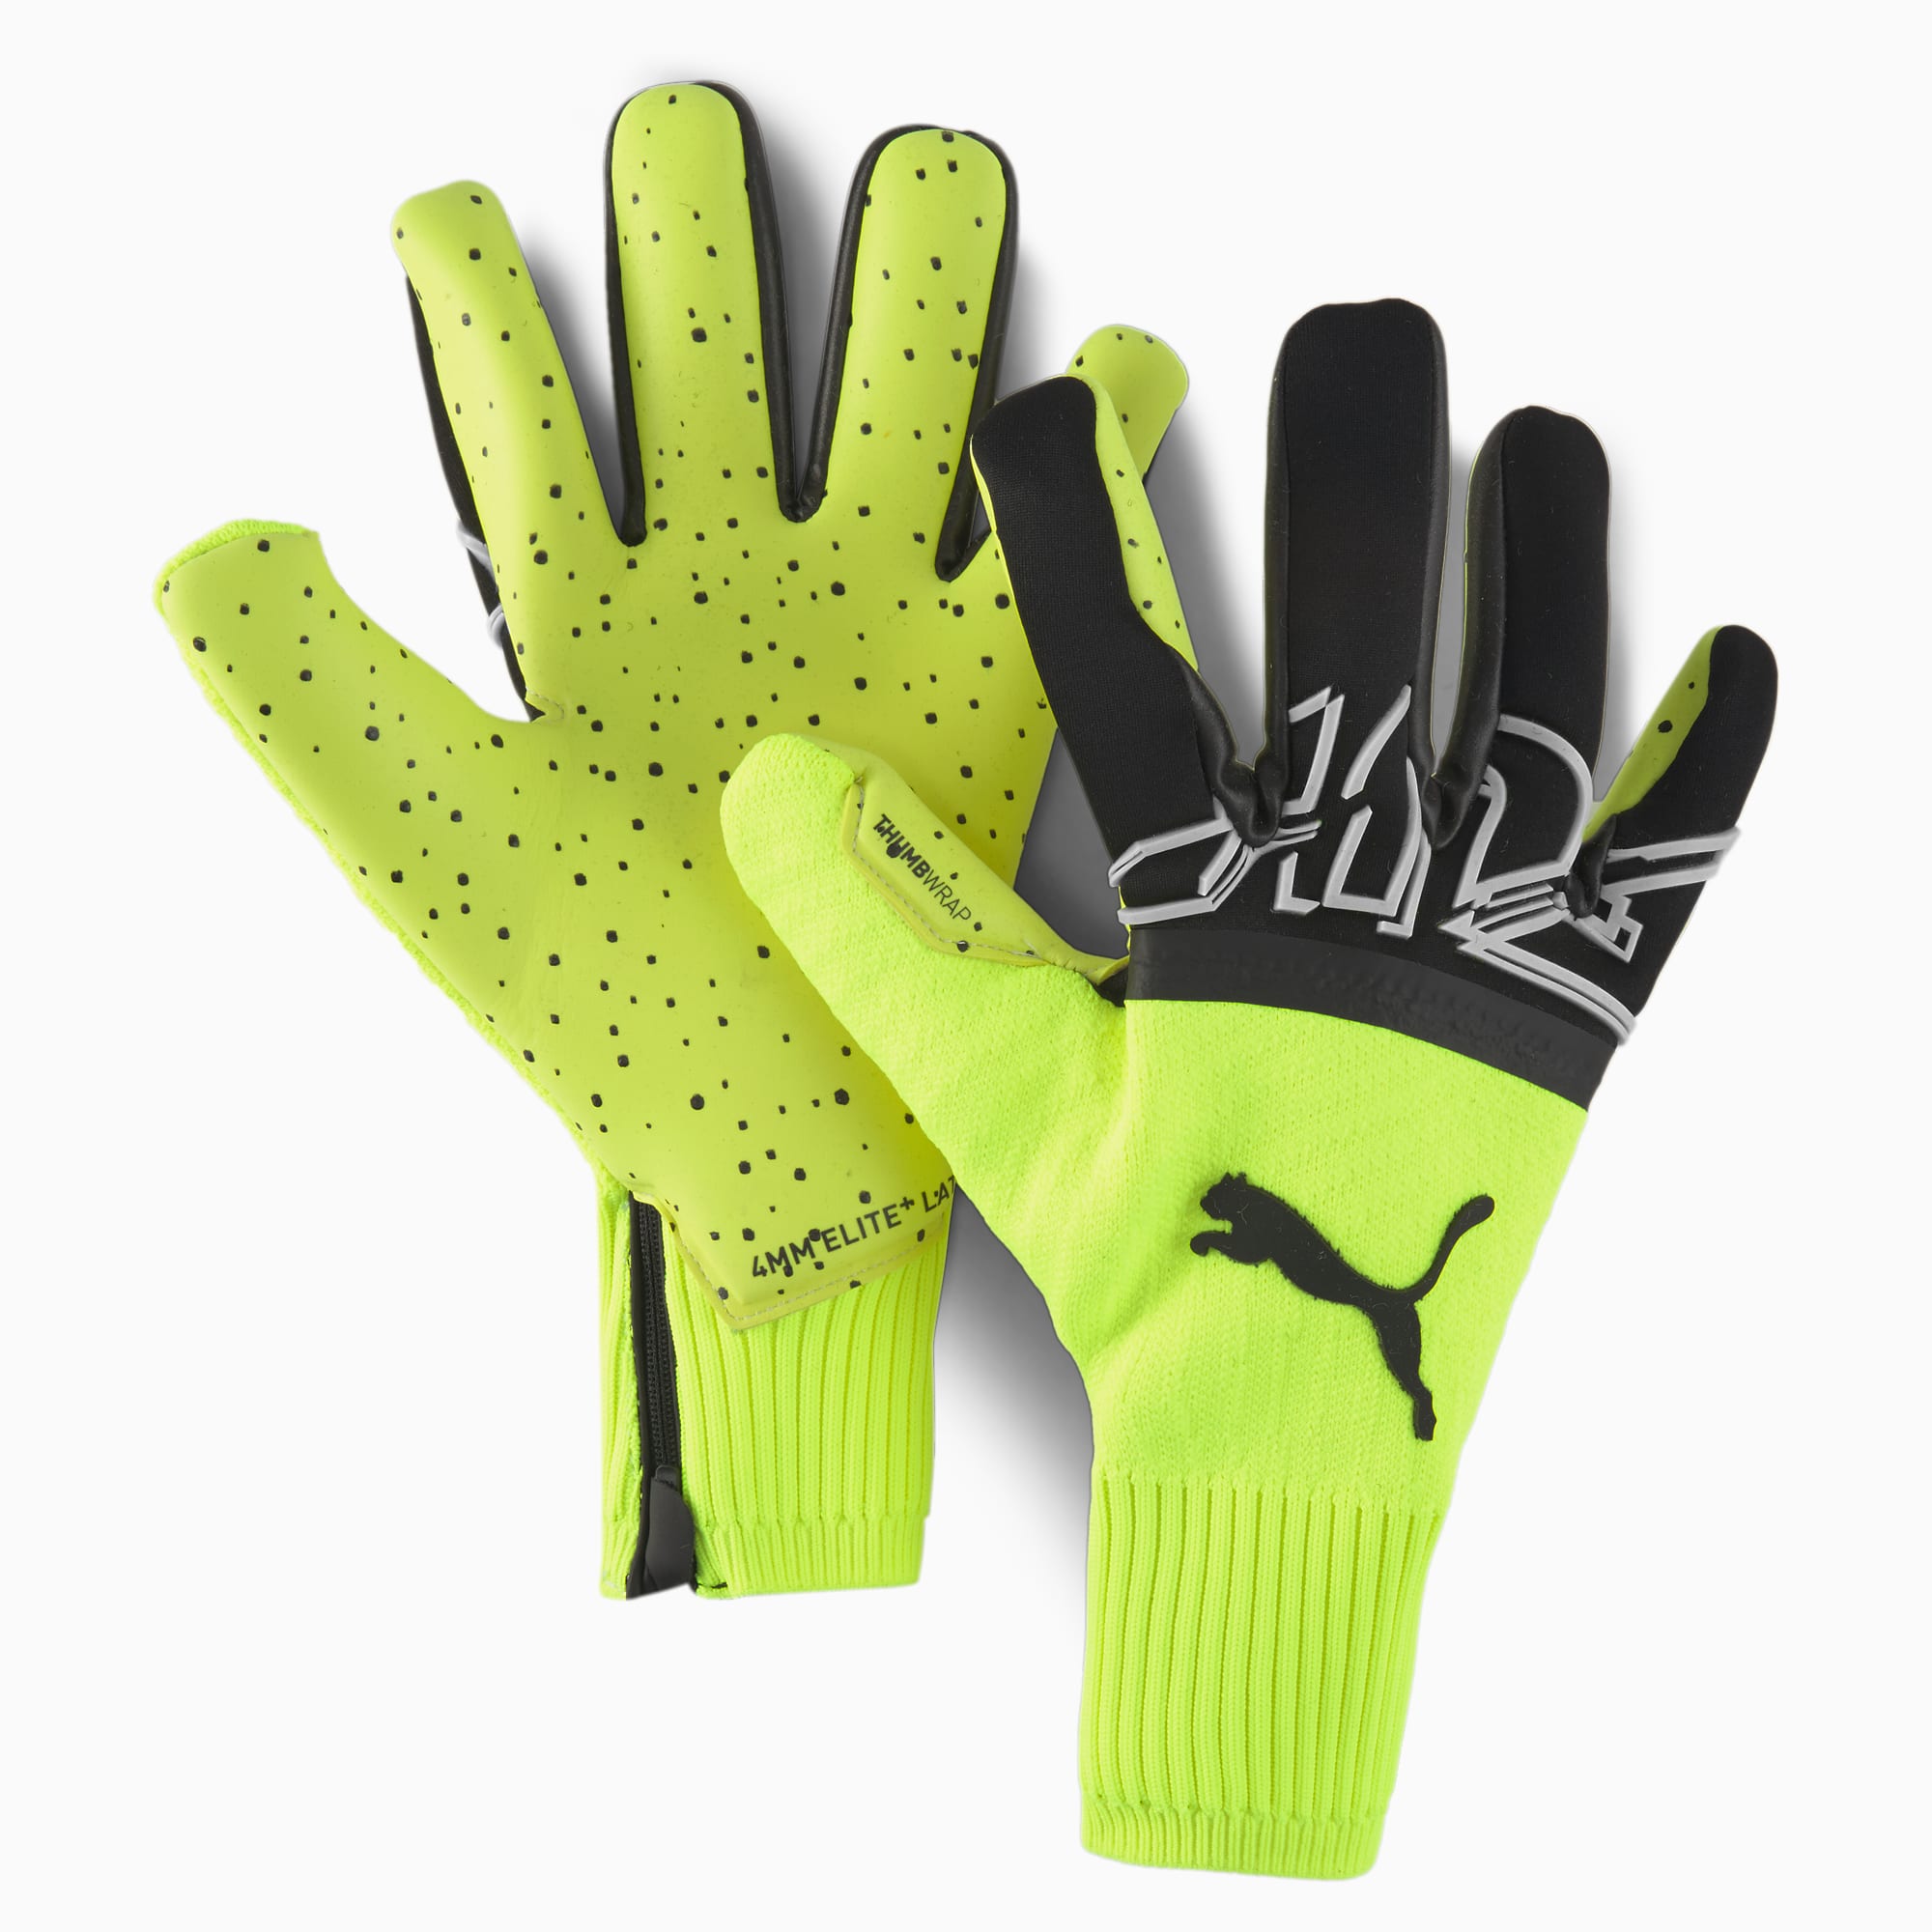 FUTURE Z Grip 1 Hybrid Goalkeeper Gloves | PUMA